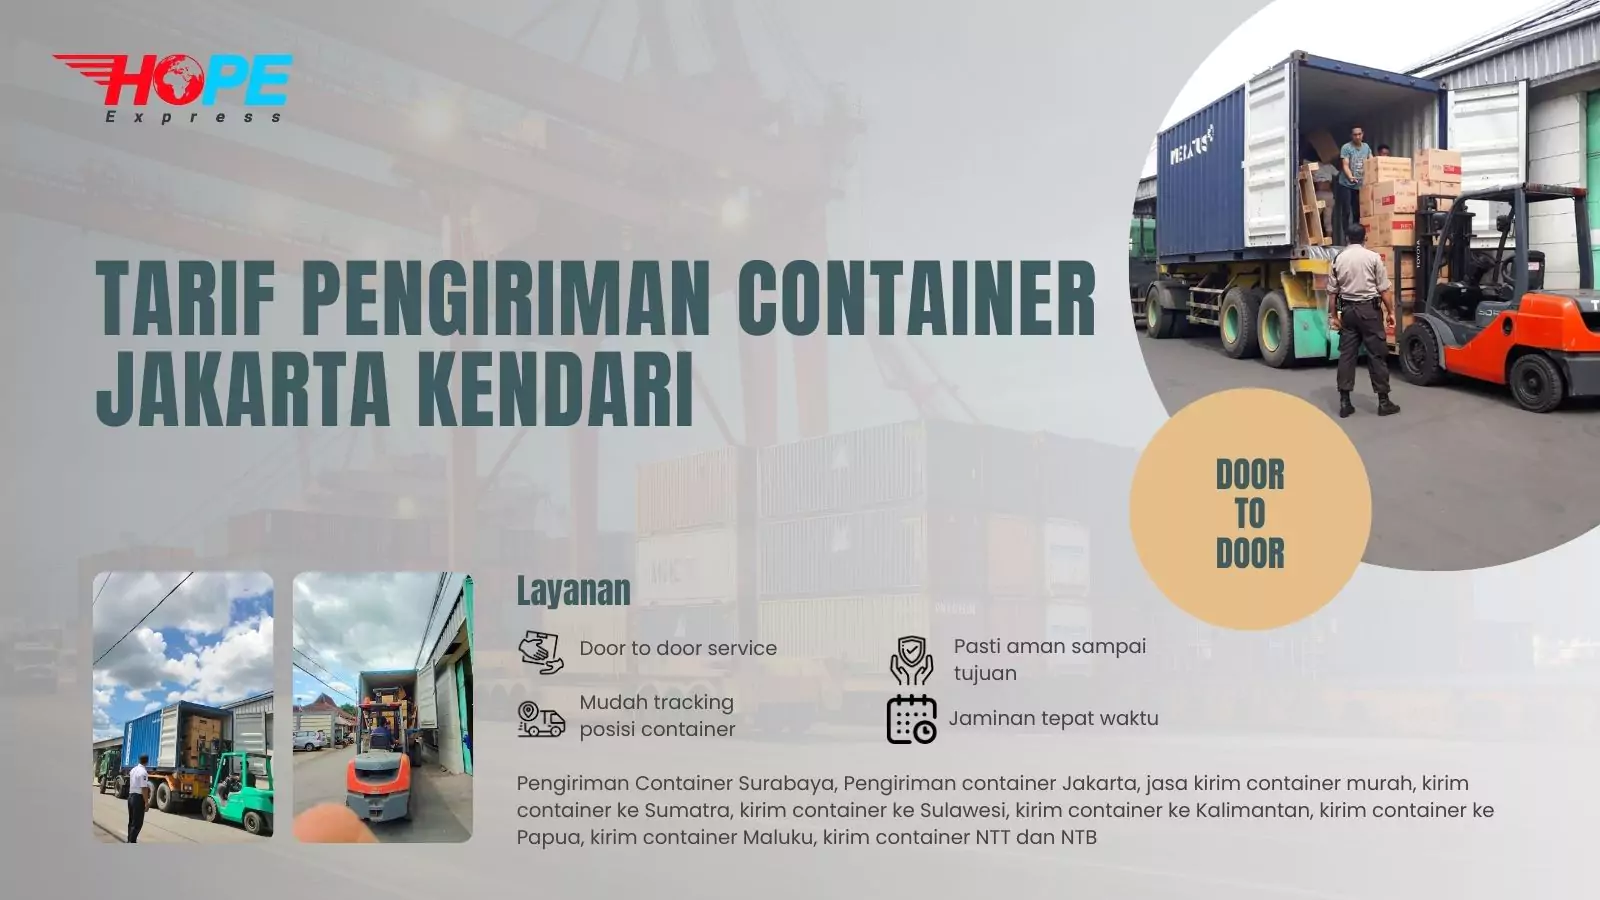 Tarif Pengiriman Container Jakarta Kendari